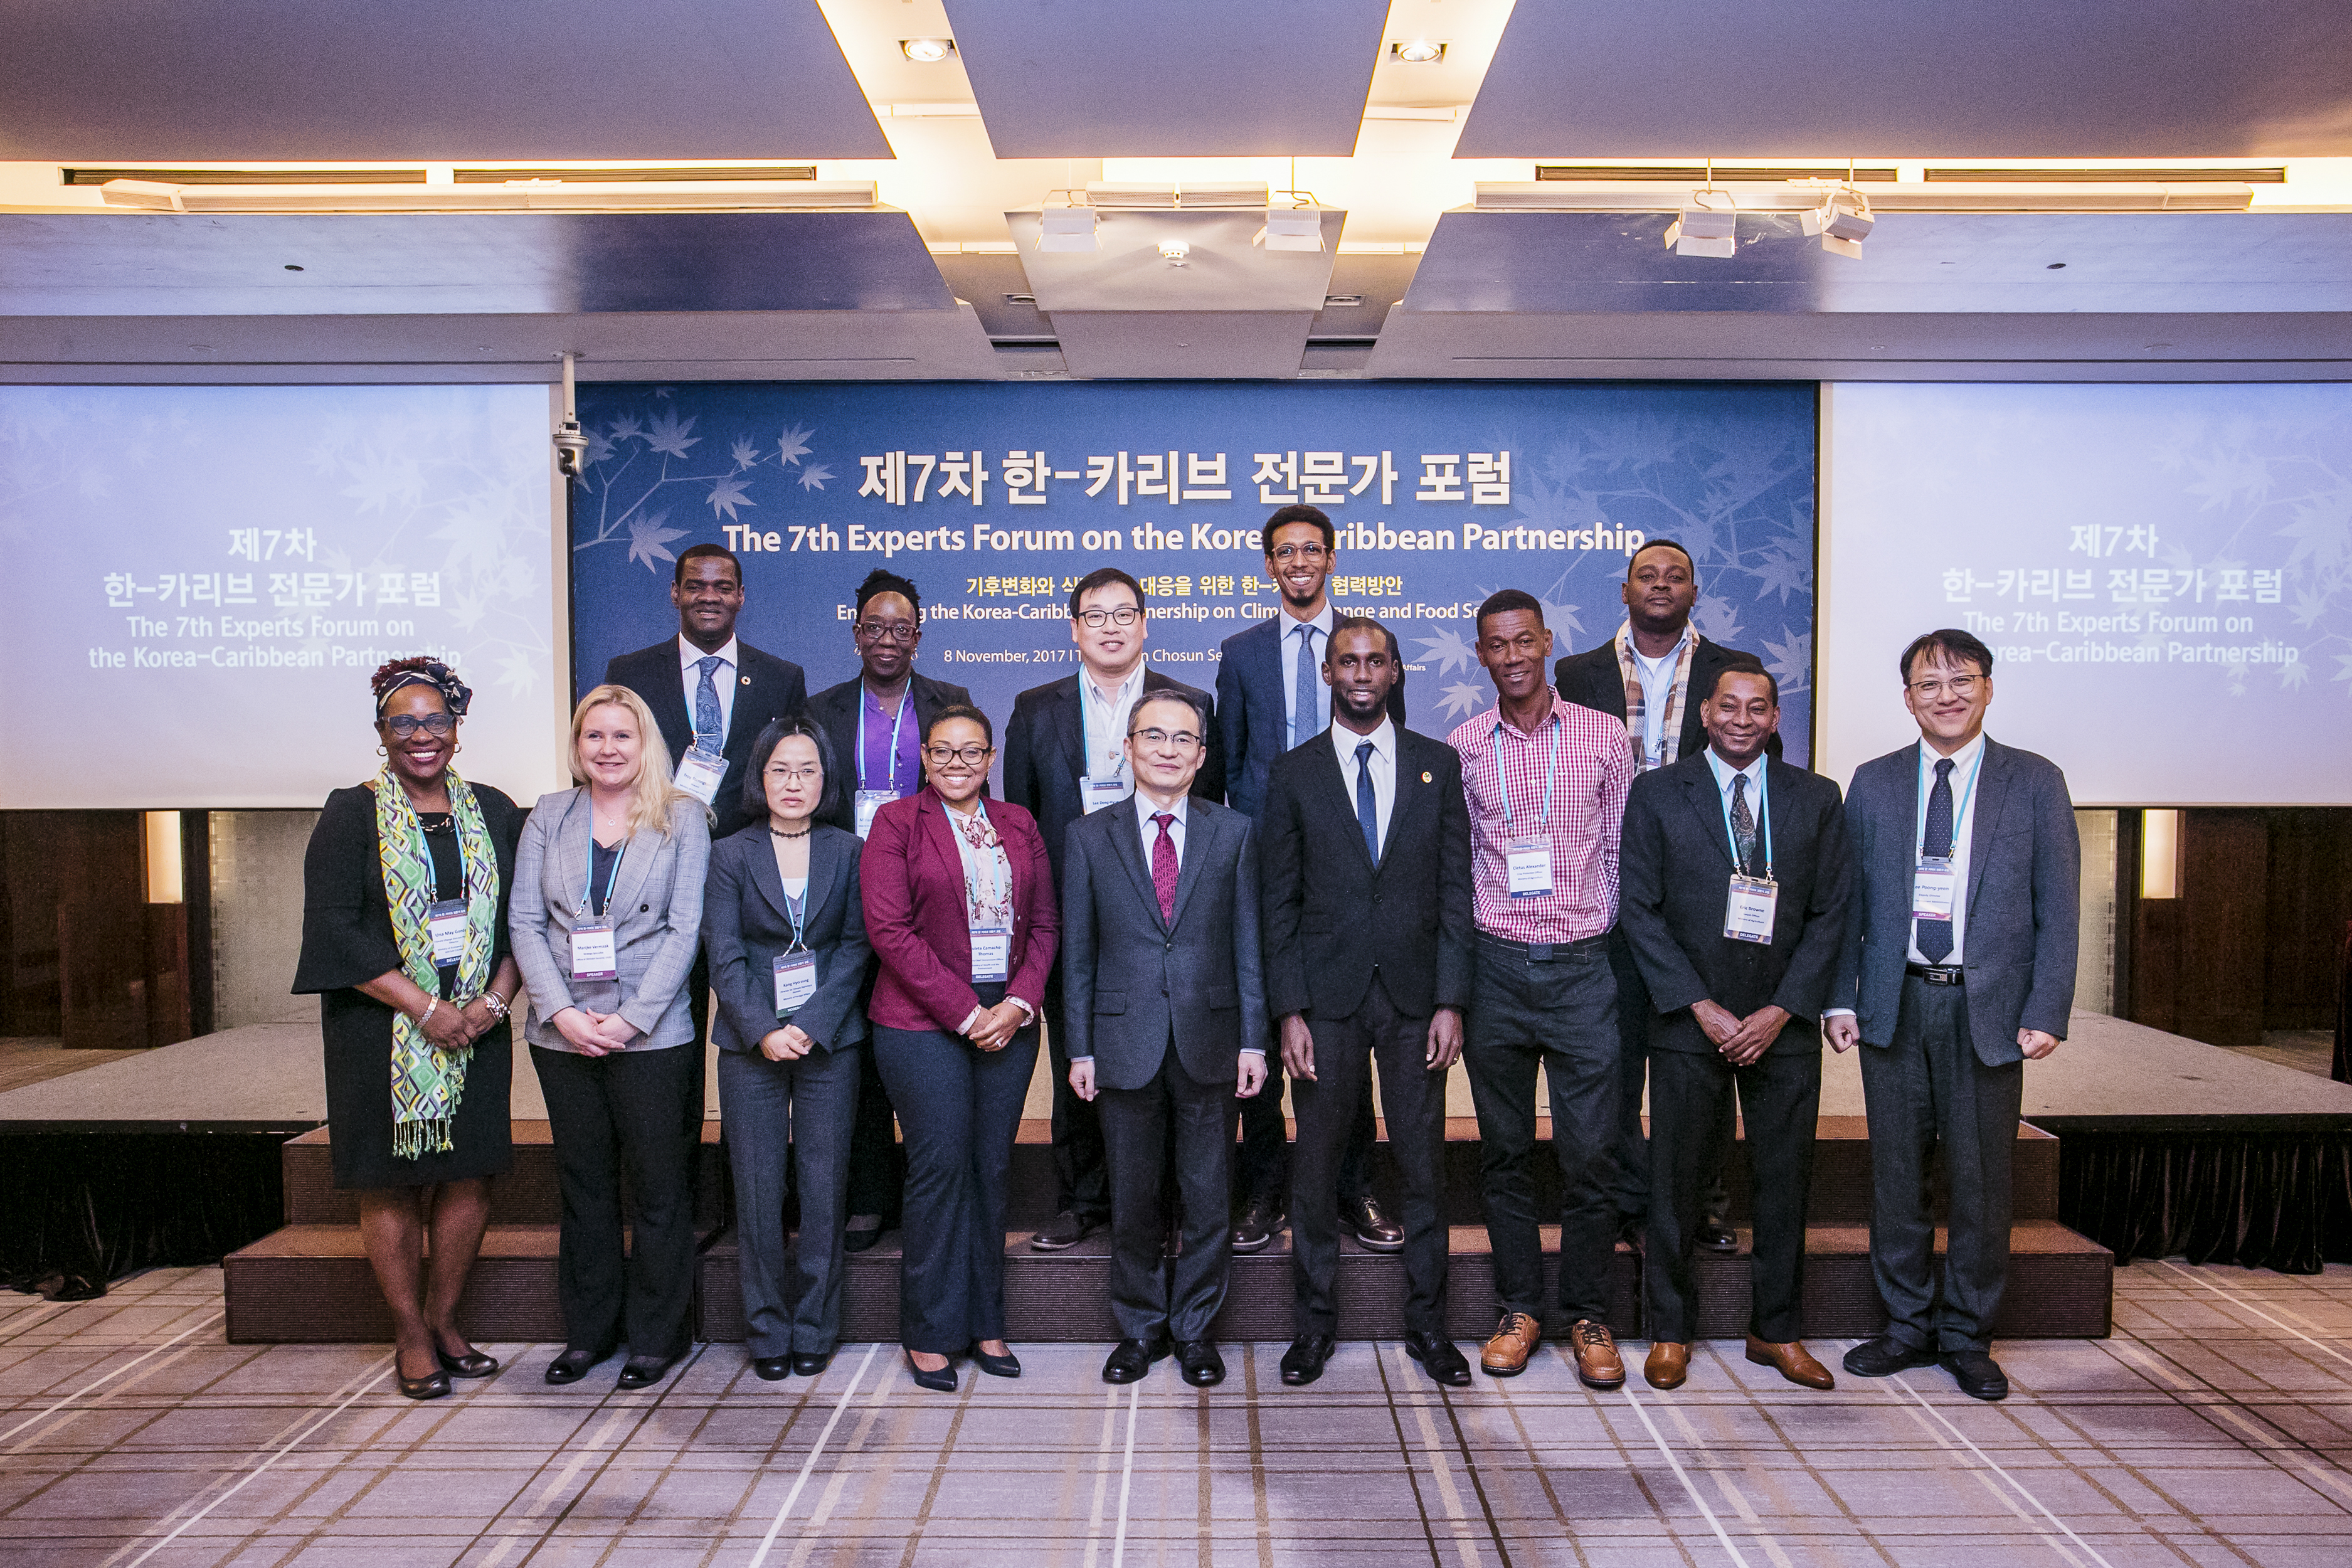 The 7th Experts Forum on the Korea-Caribbean Partnership image